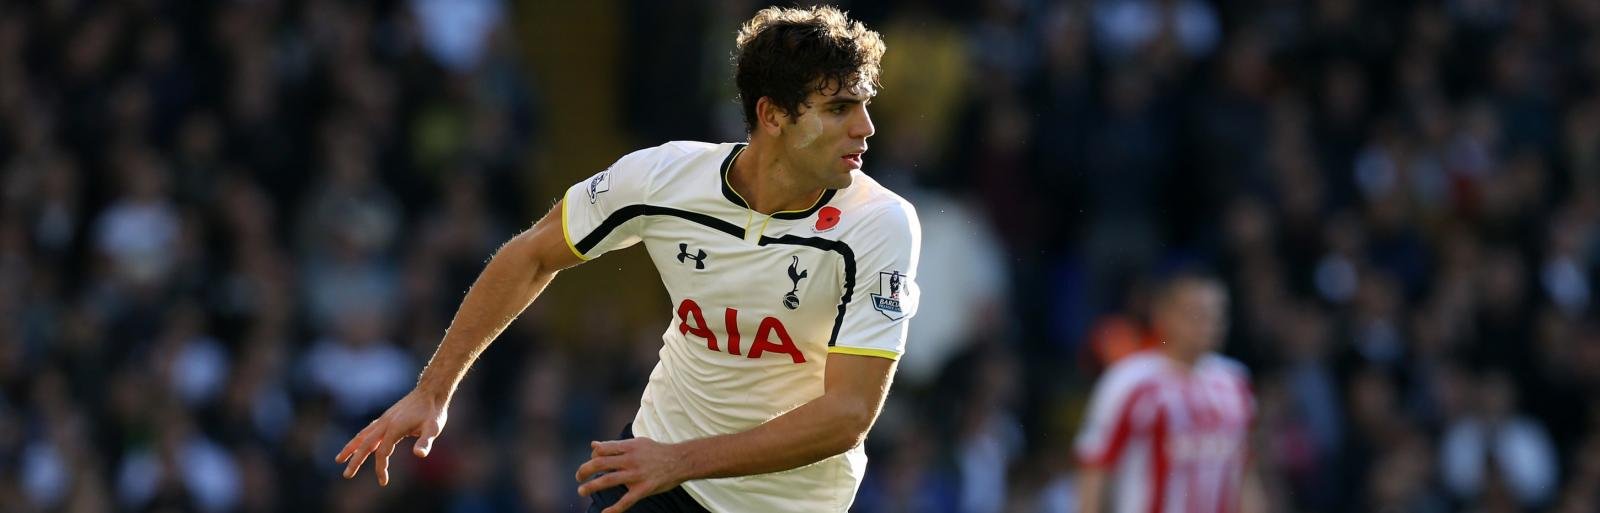 European clubs keen on signing Tottenham’s £8m defender